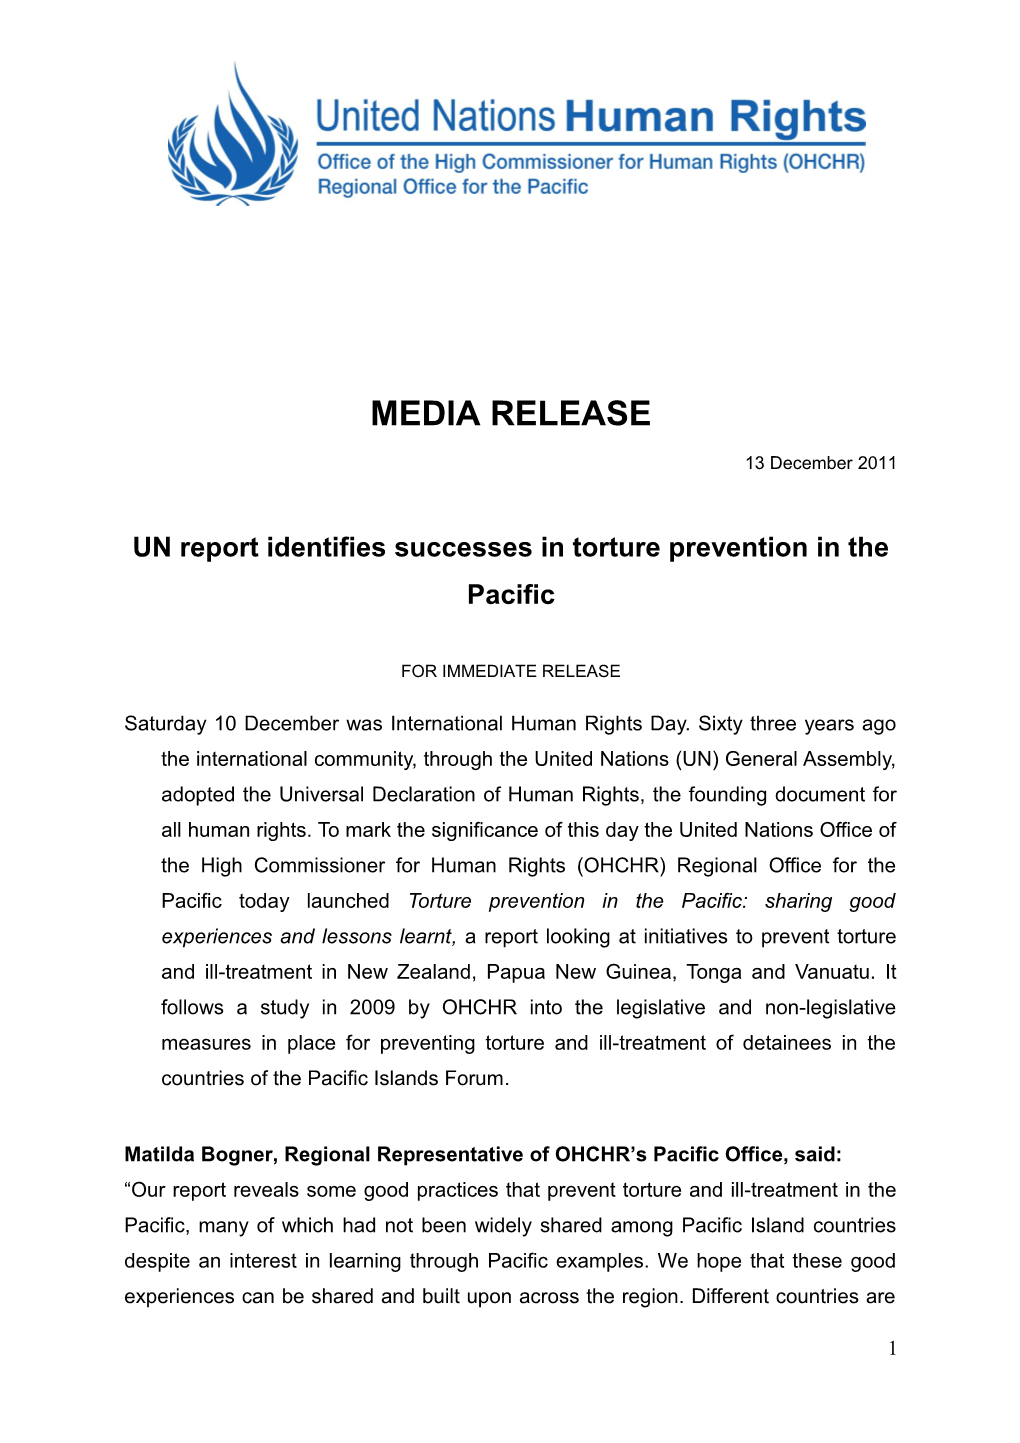 UN Report Identifiessuccessesintorture Preventionin the Pacific